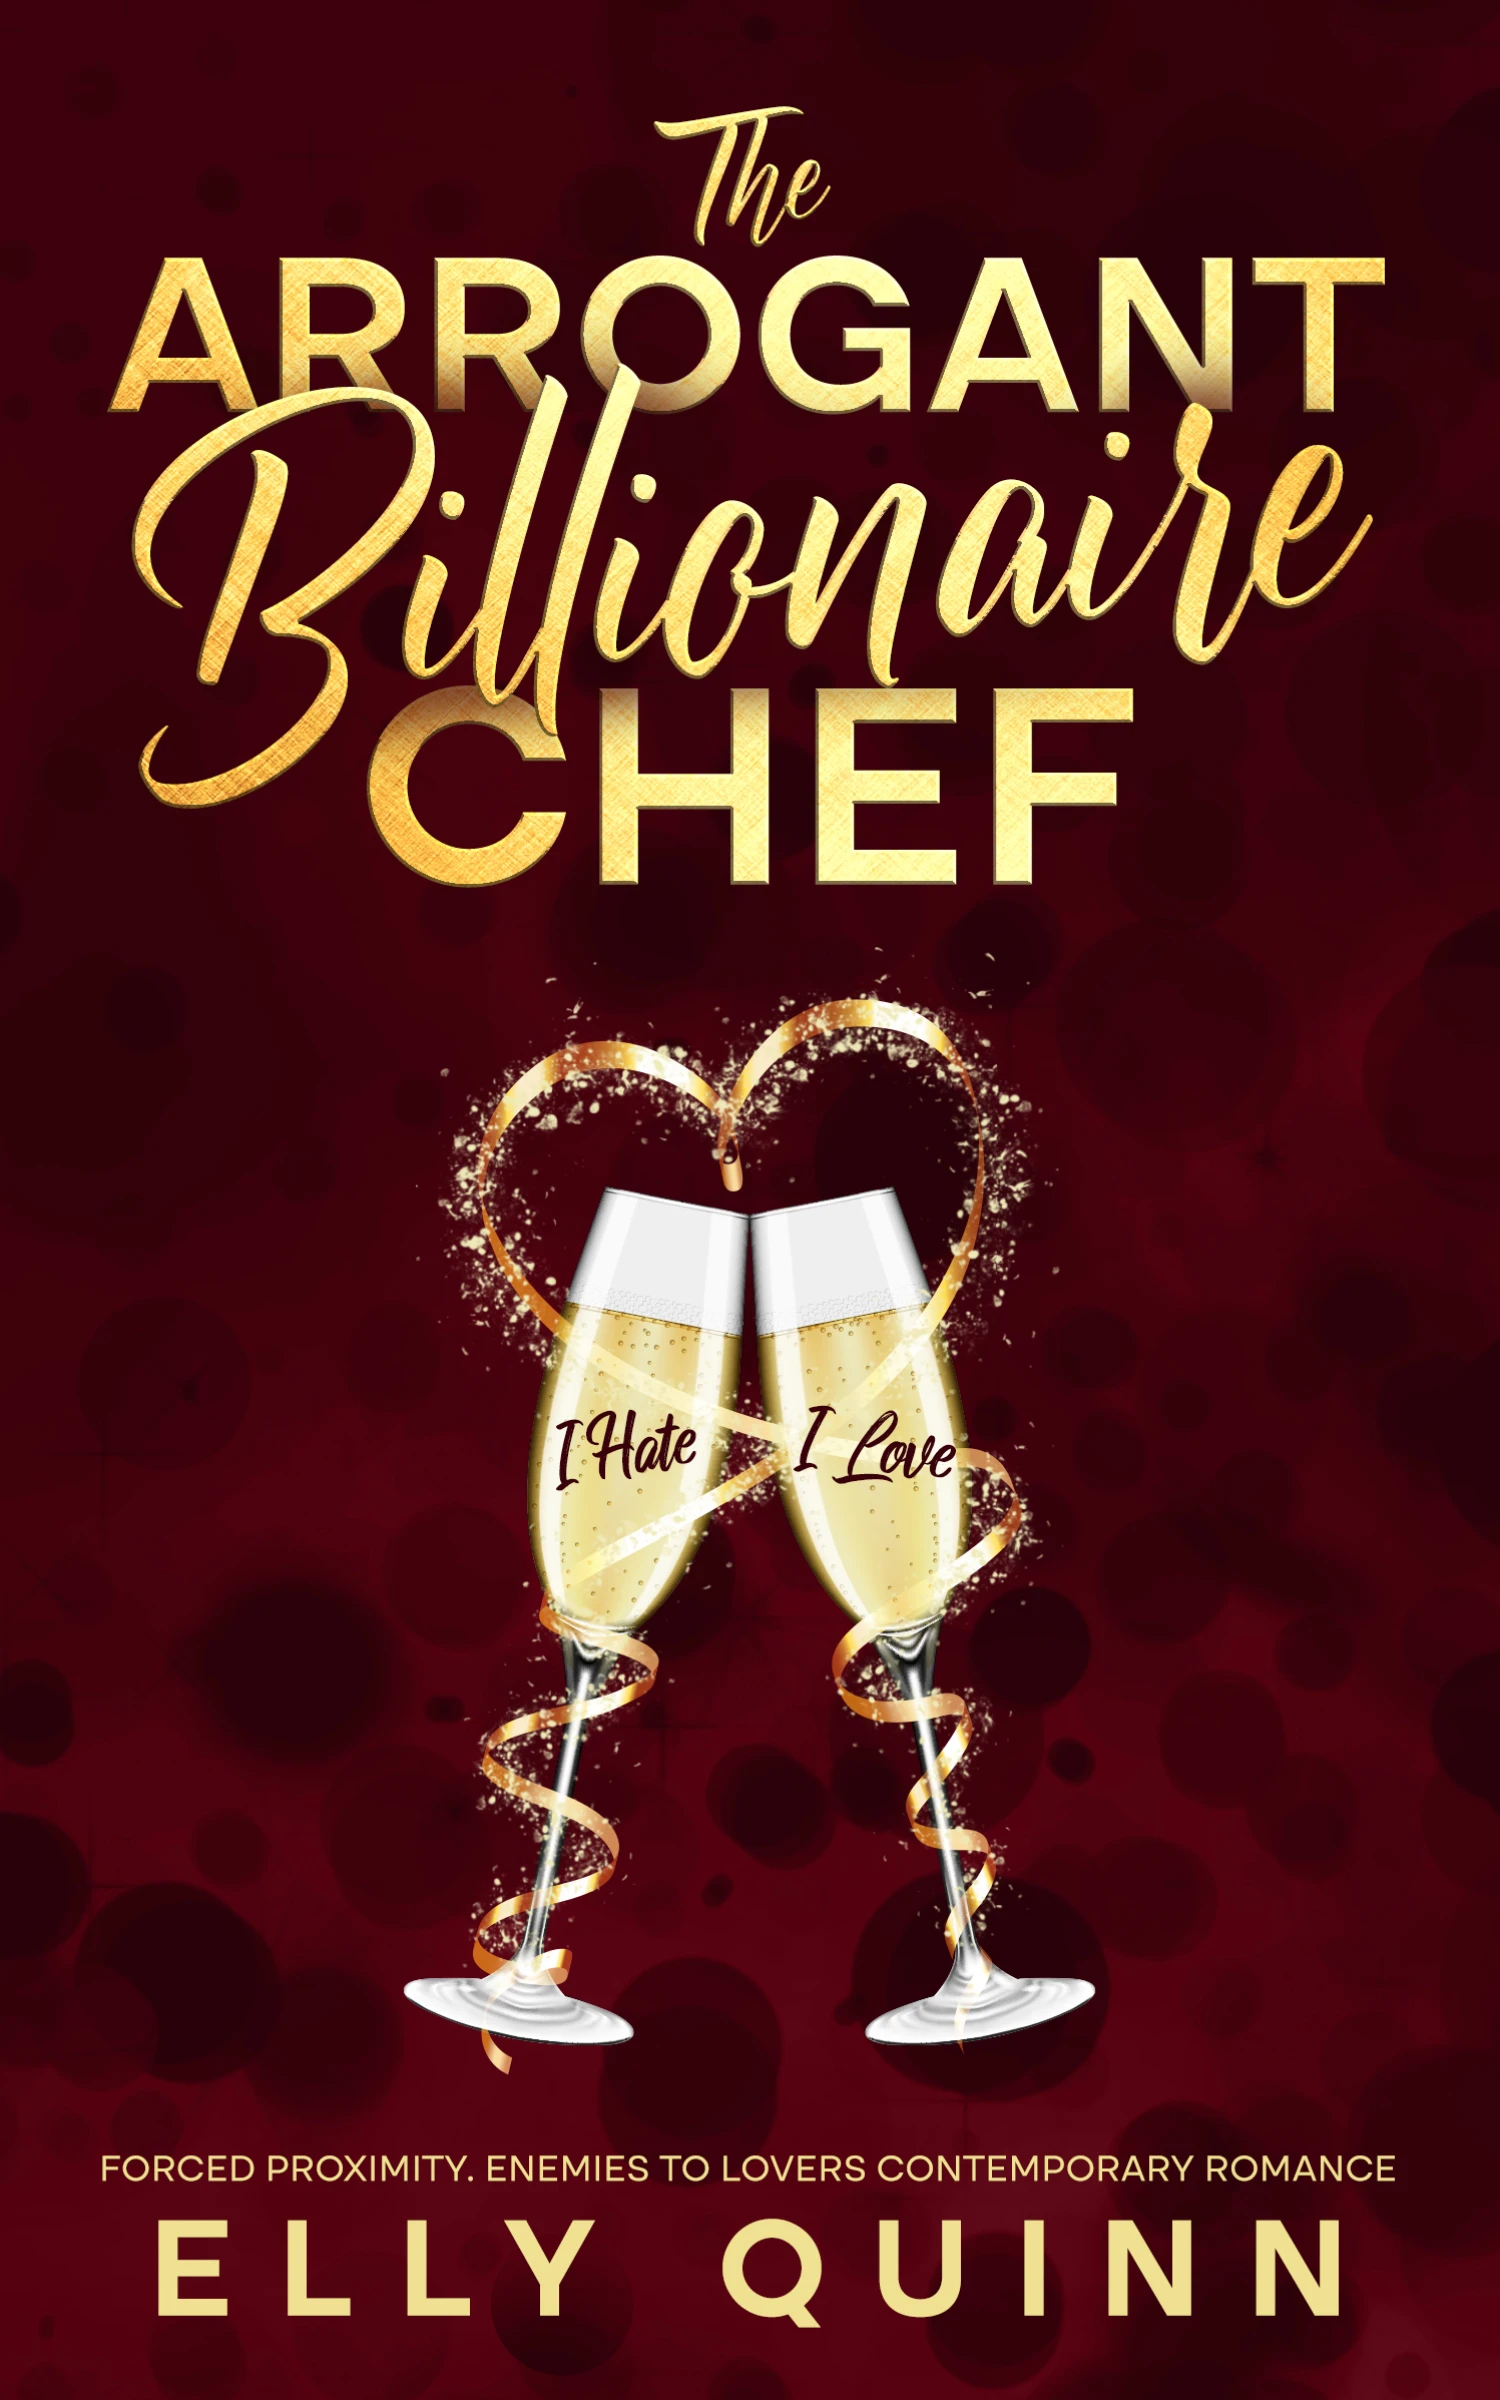 The Arrogant Billionaire Chef